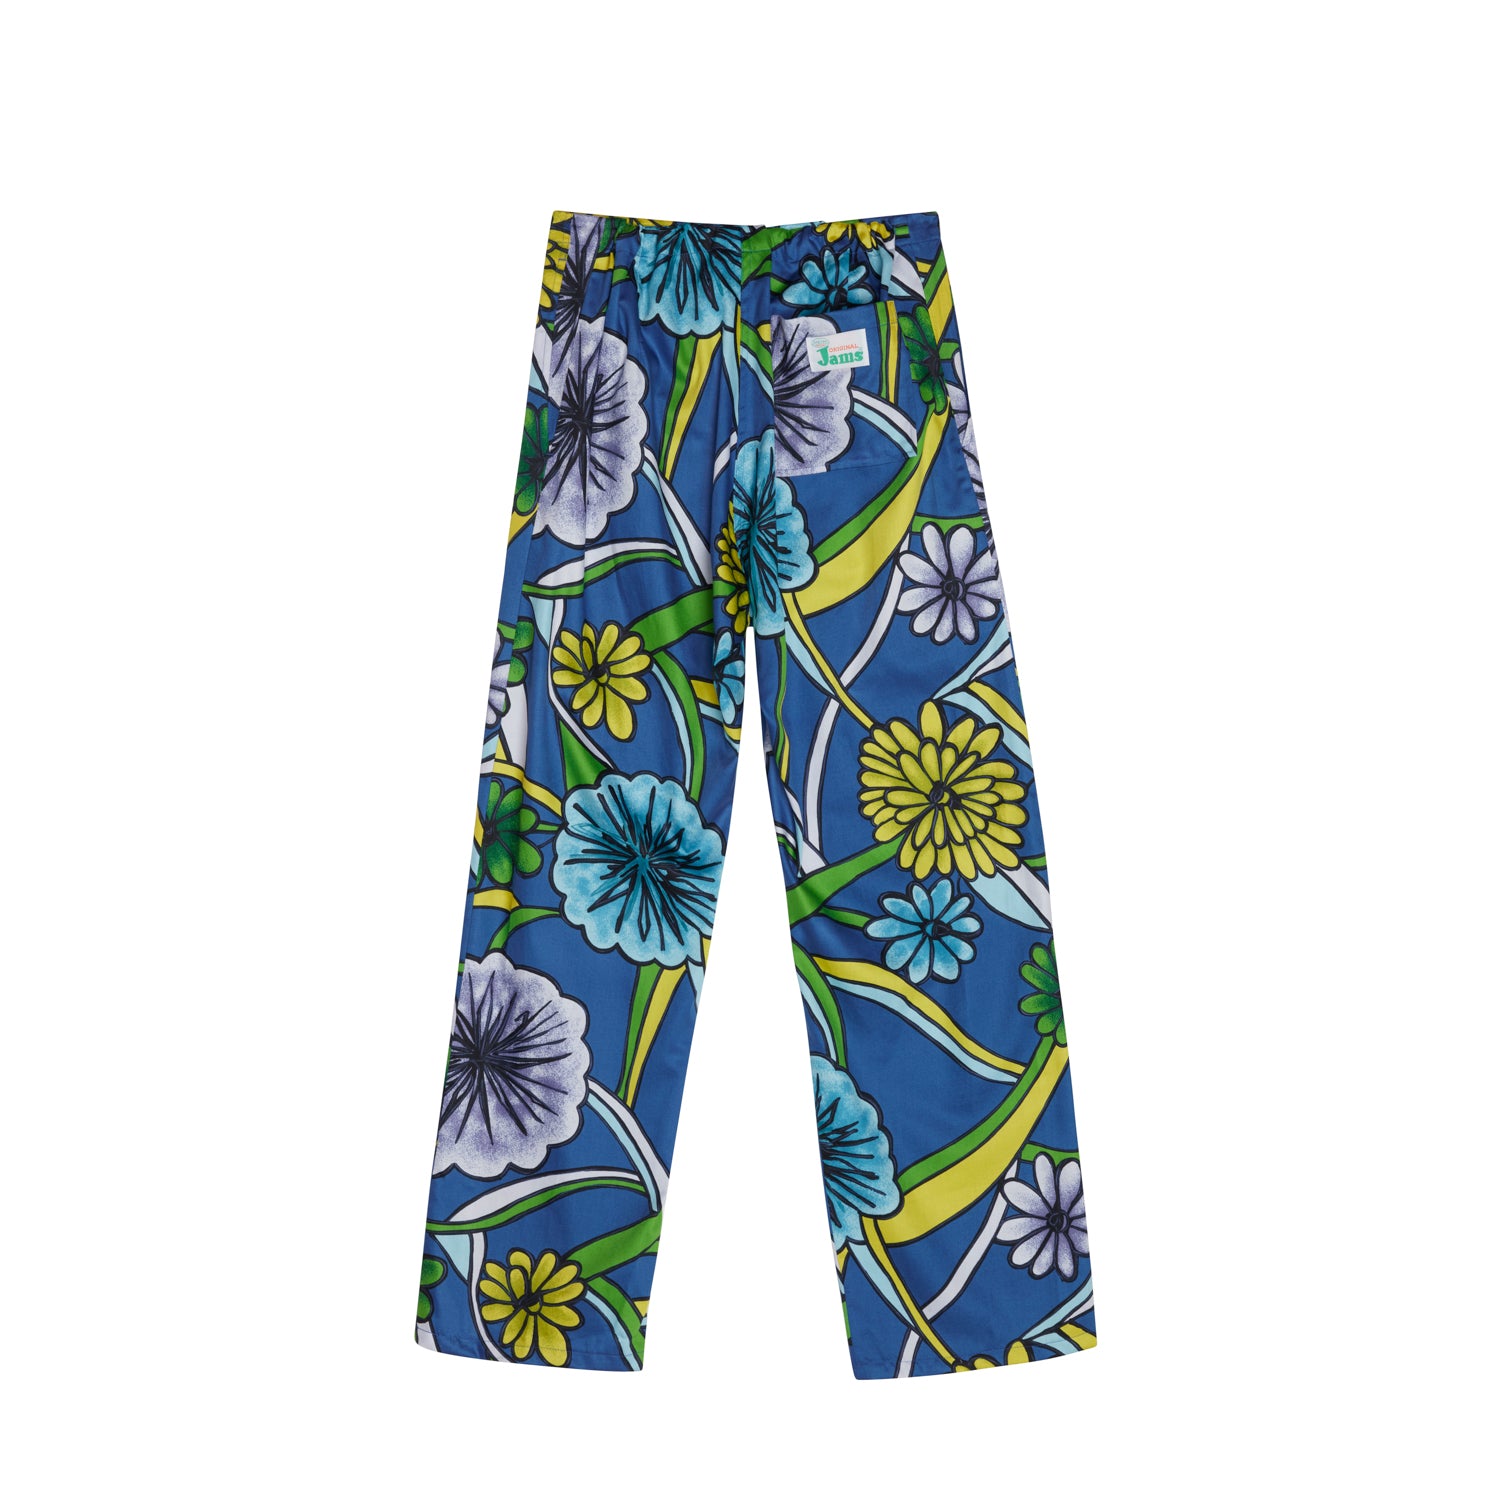 Men's Jams Pants - Laguna Blue